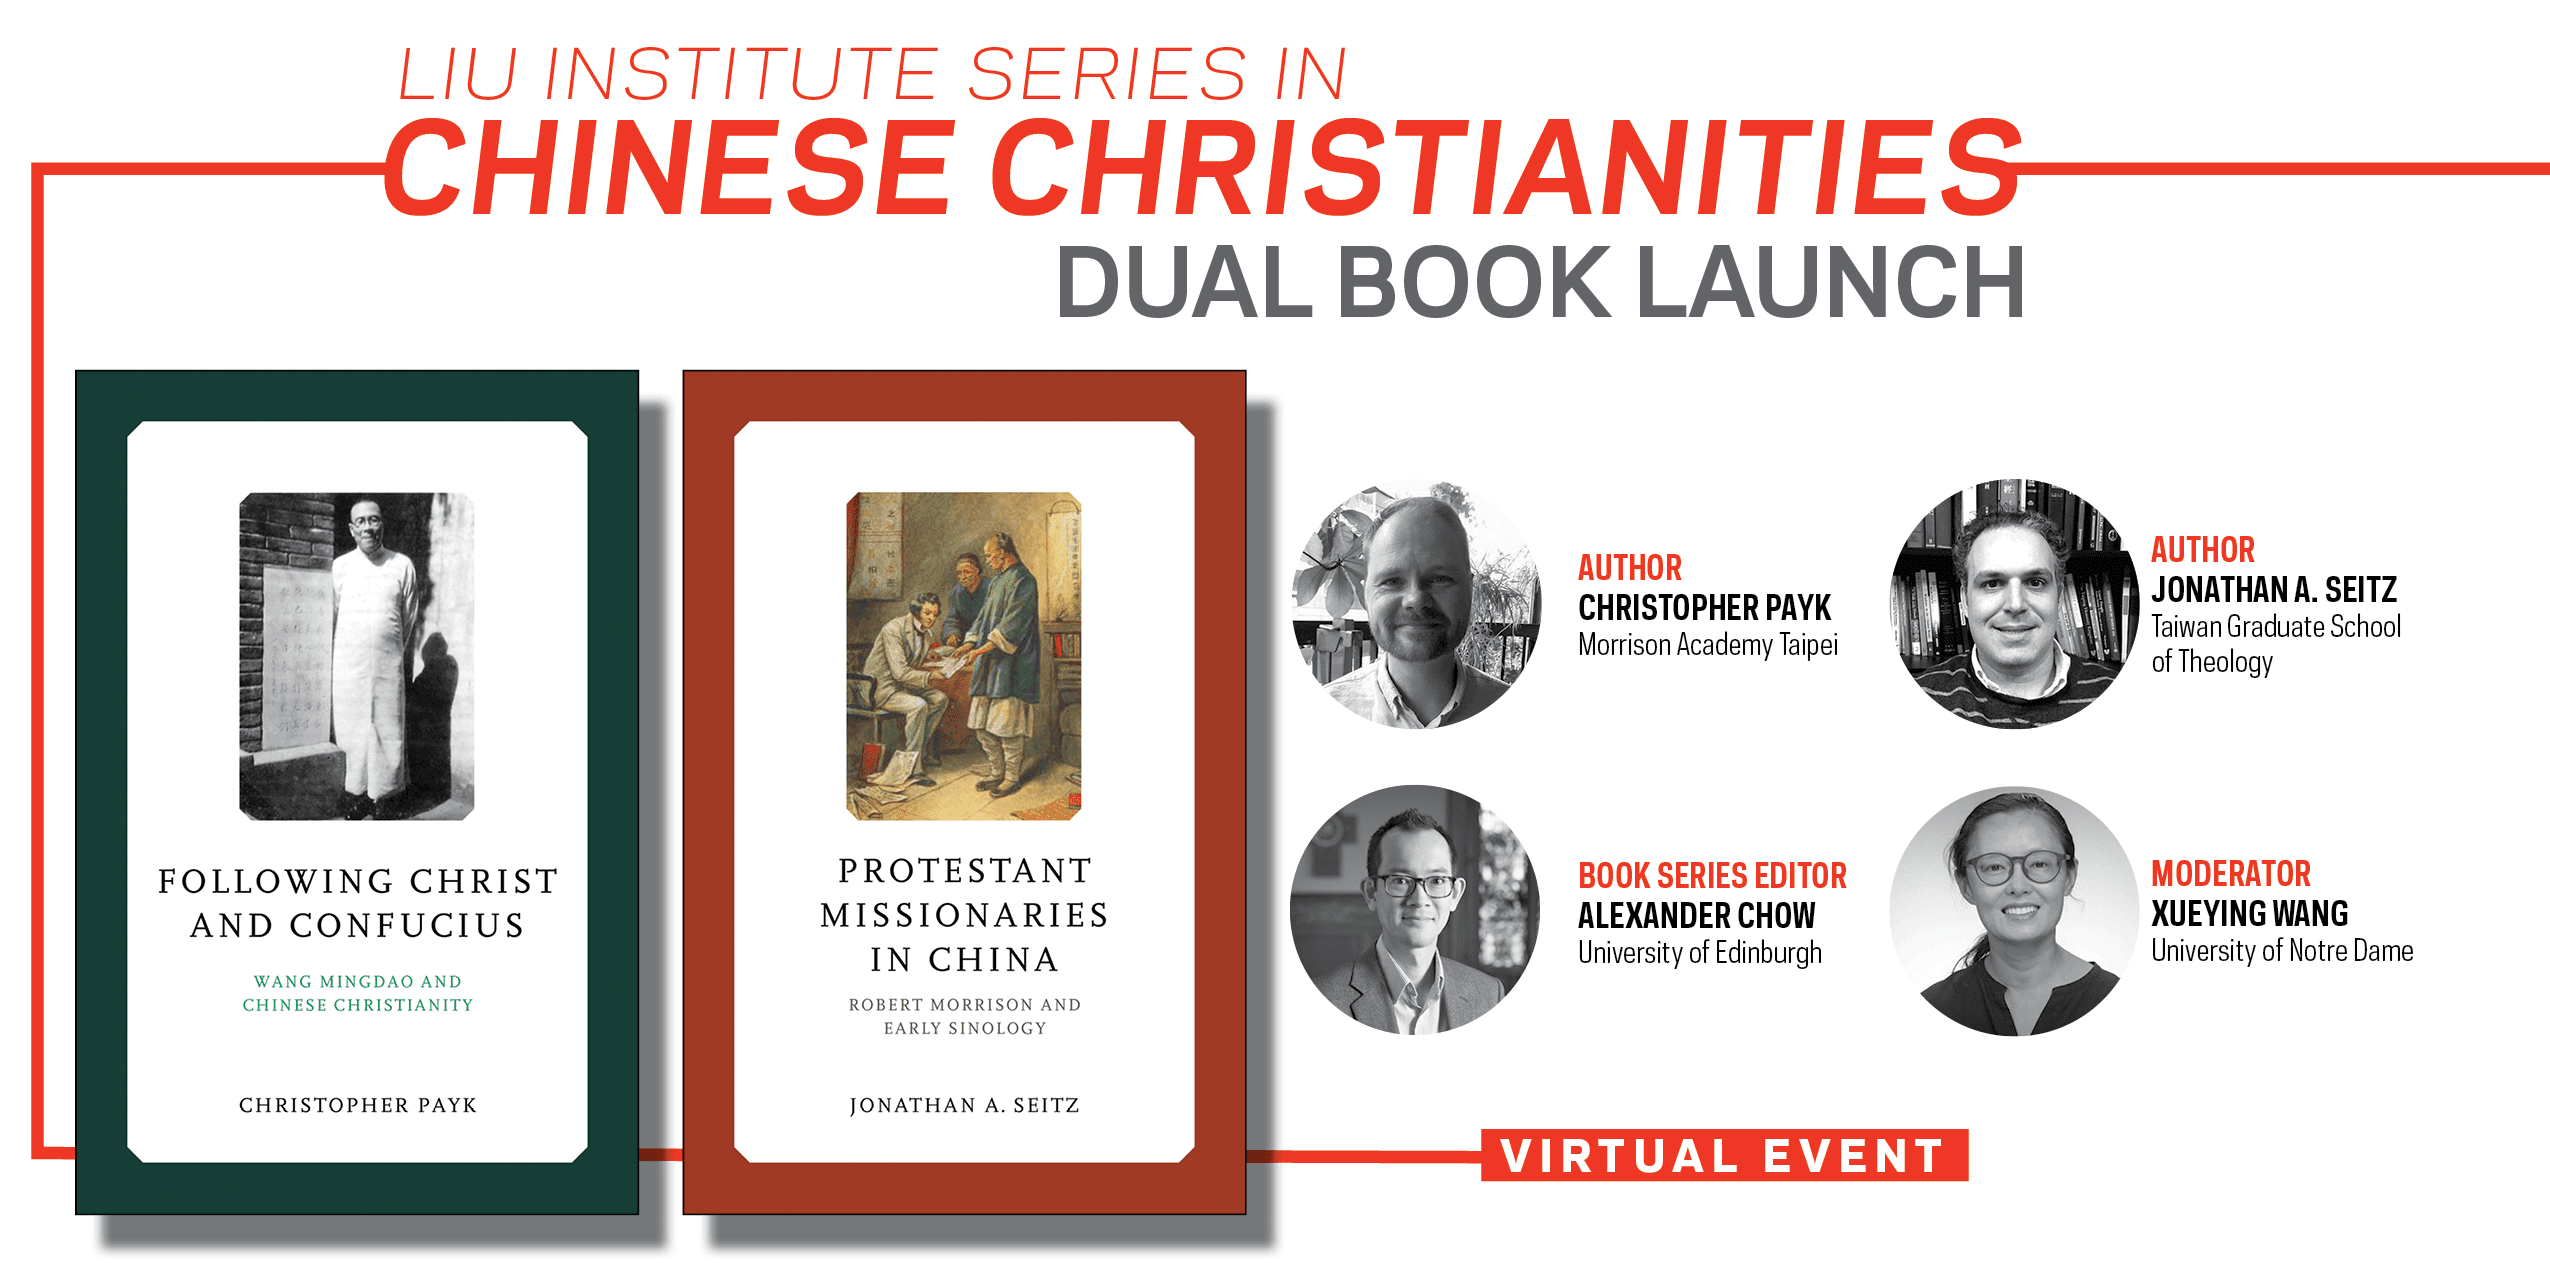 Liu Institute Series in Chinese Christianities Dual Book Launch